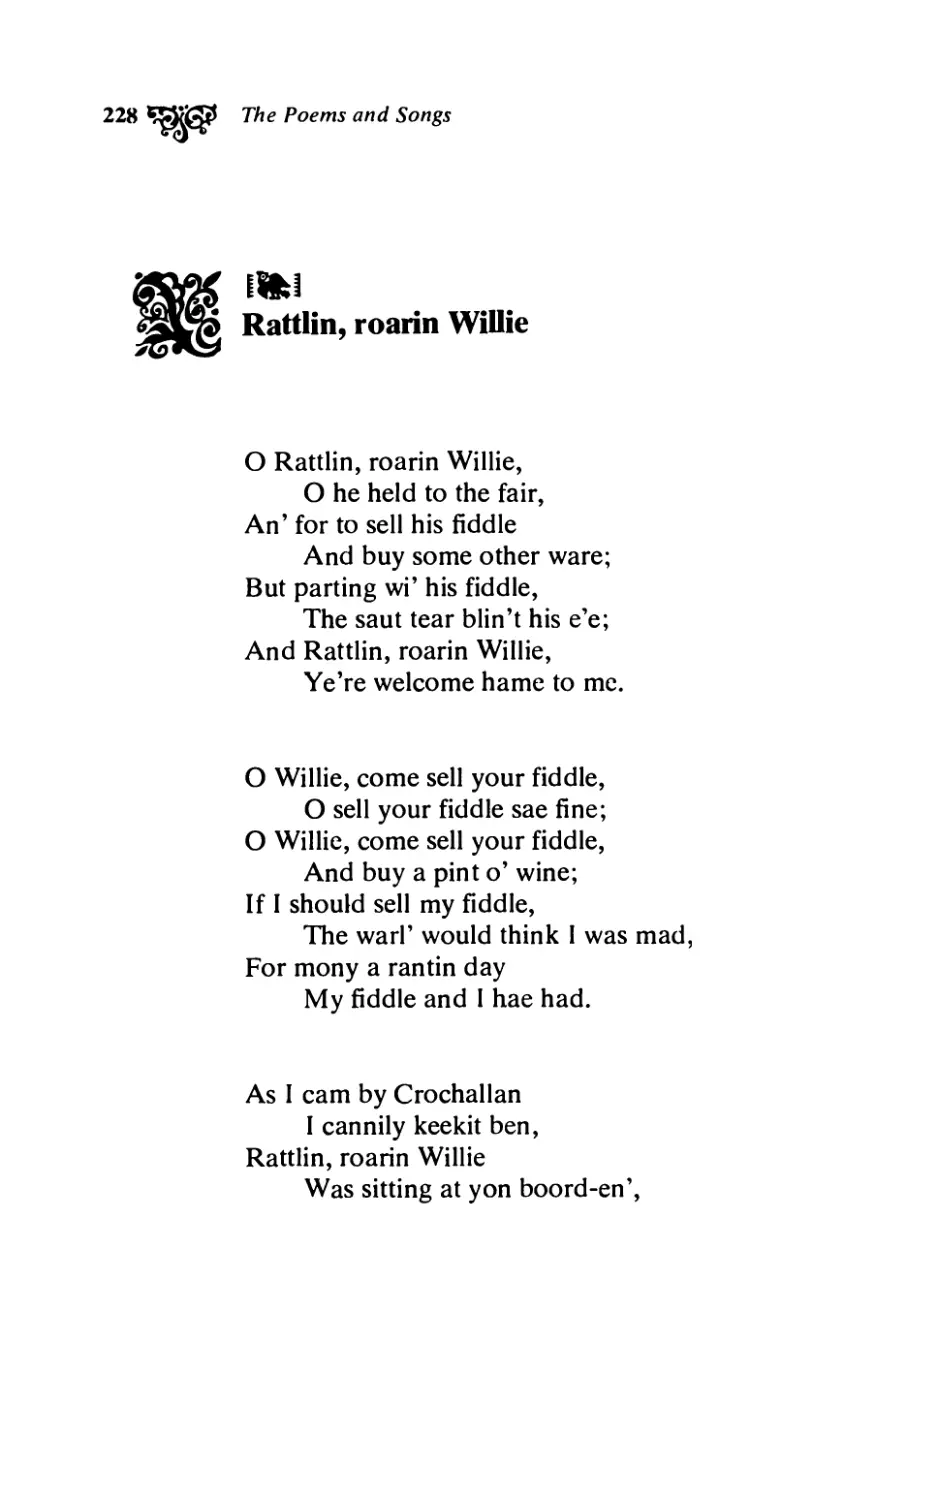 Rattlin, roarin Willie